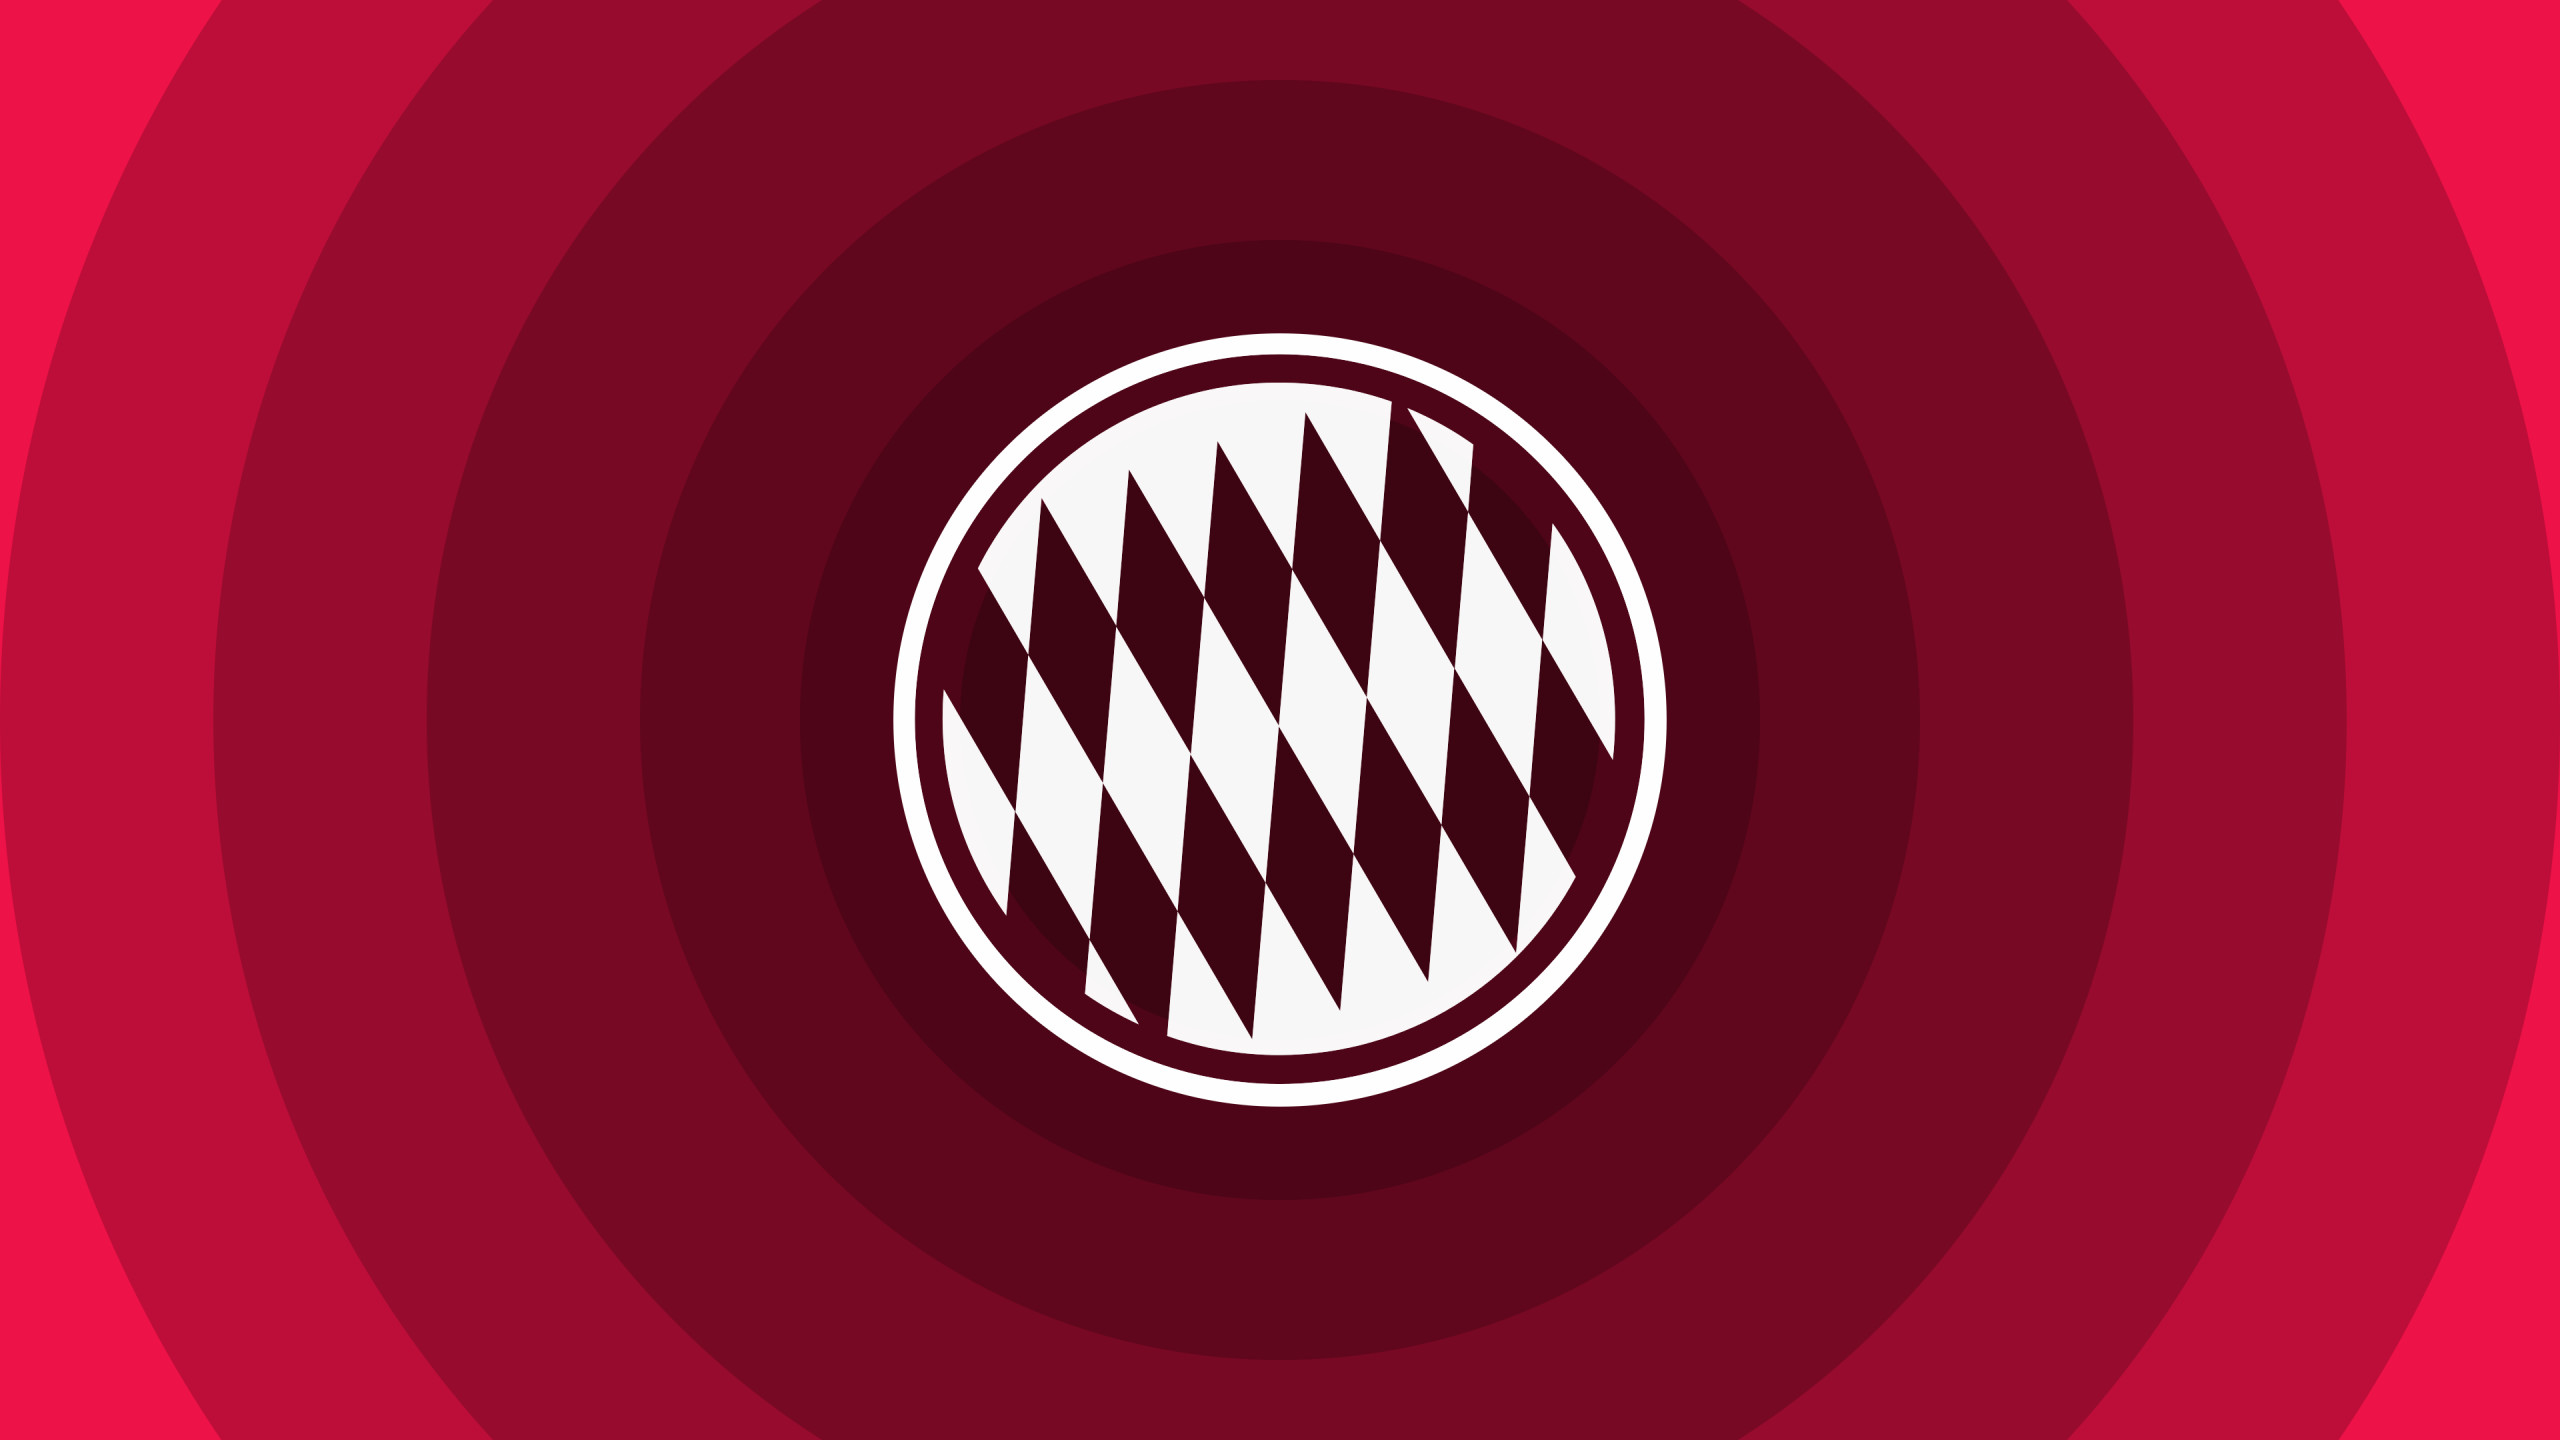 2560x1440 ... Bayern Munich Minimal Logo For  Hdtv Resolution. Download